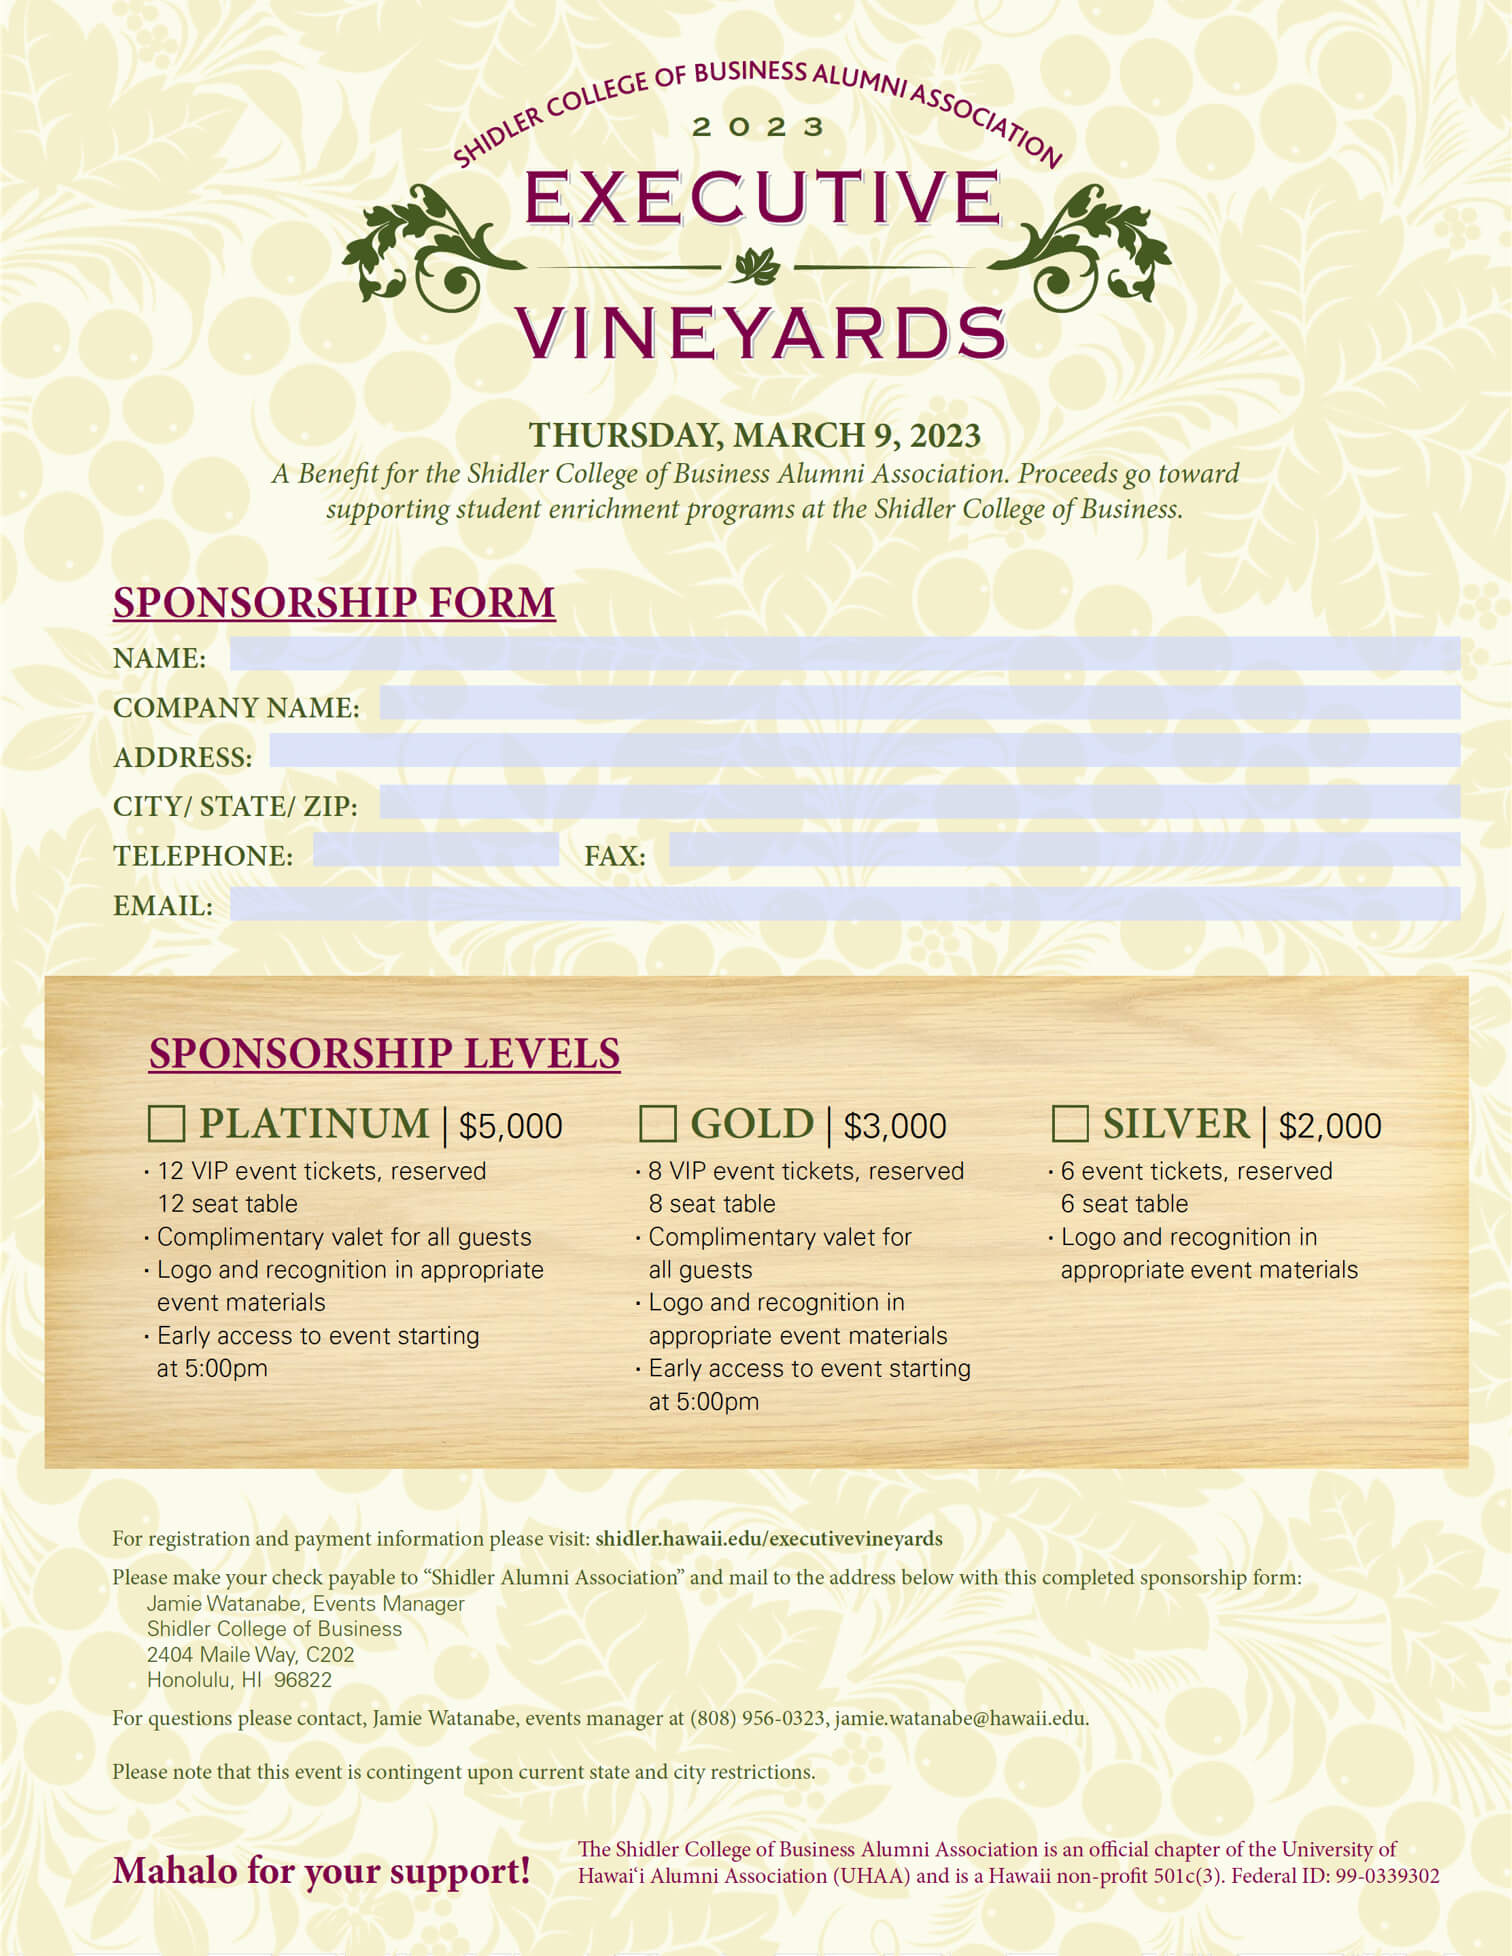 Screenshtot of this year's Executive Vineyards sponsorship form.